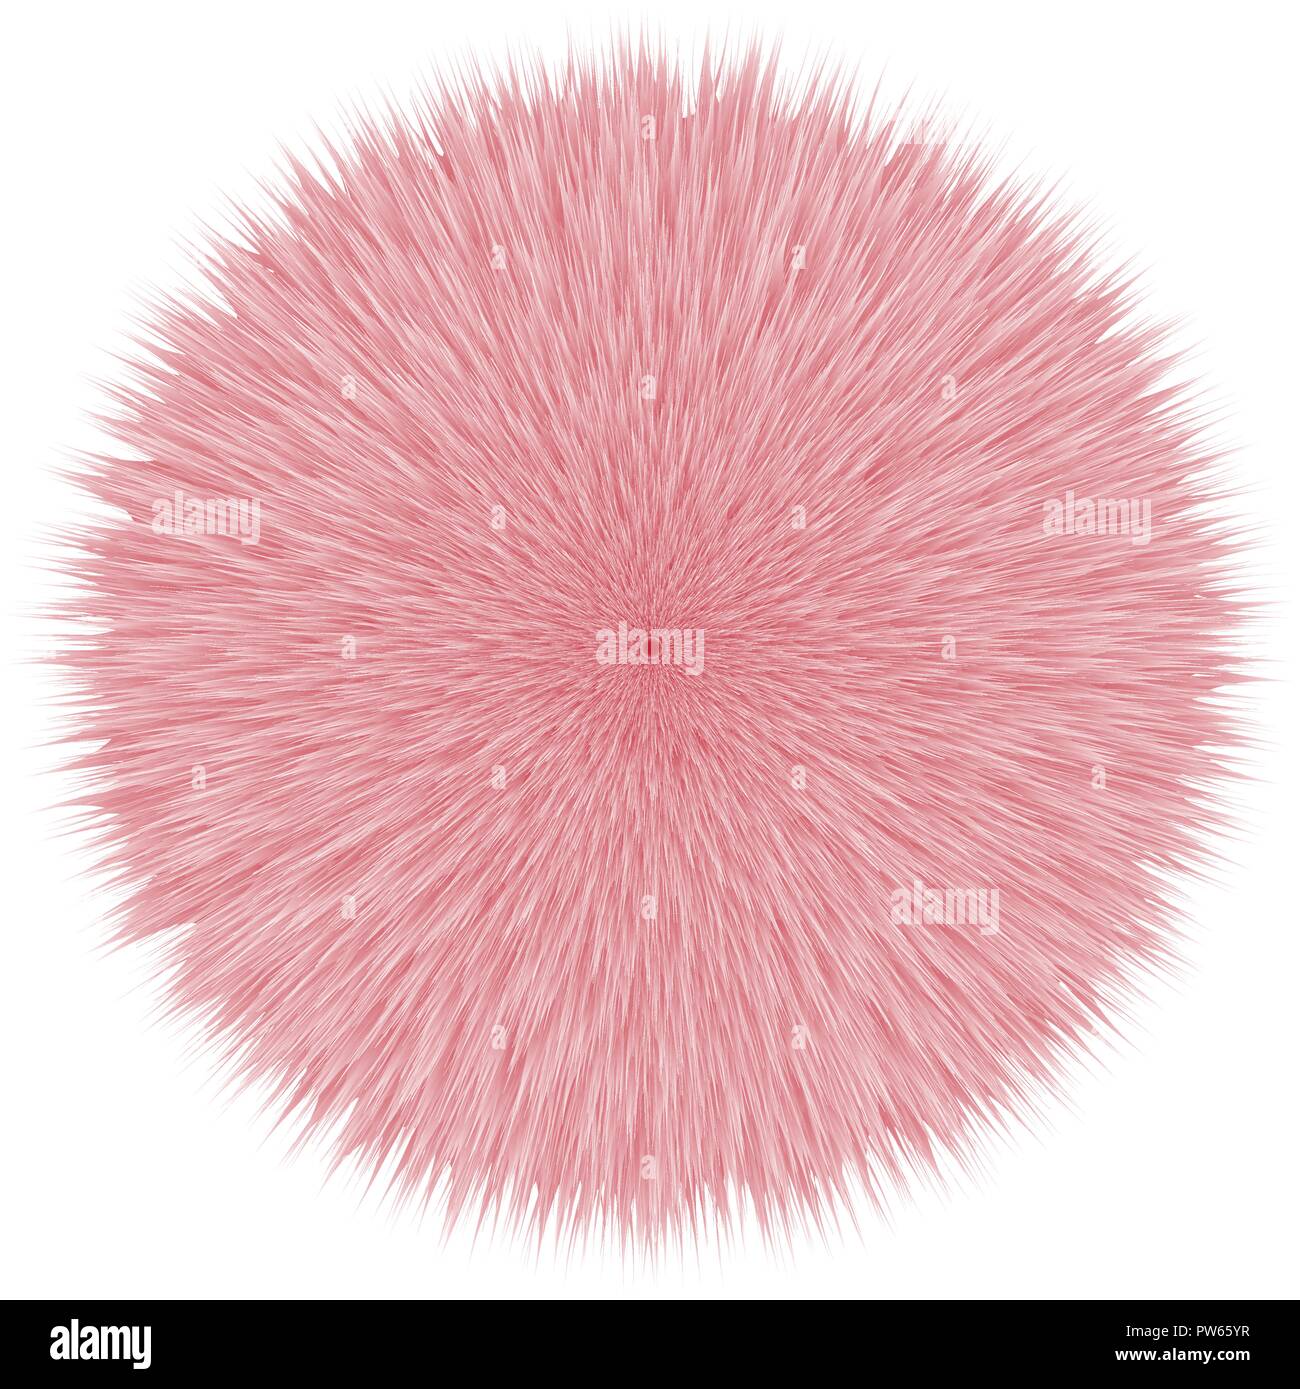 Pink Fluffy Vector Hair Ball, Illustration on White Background Stock Vector